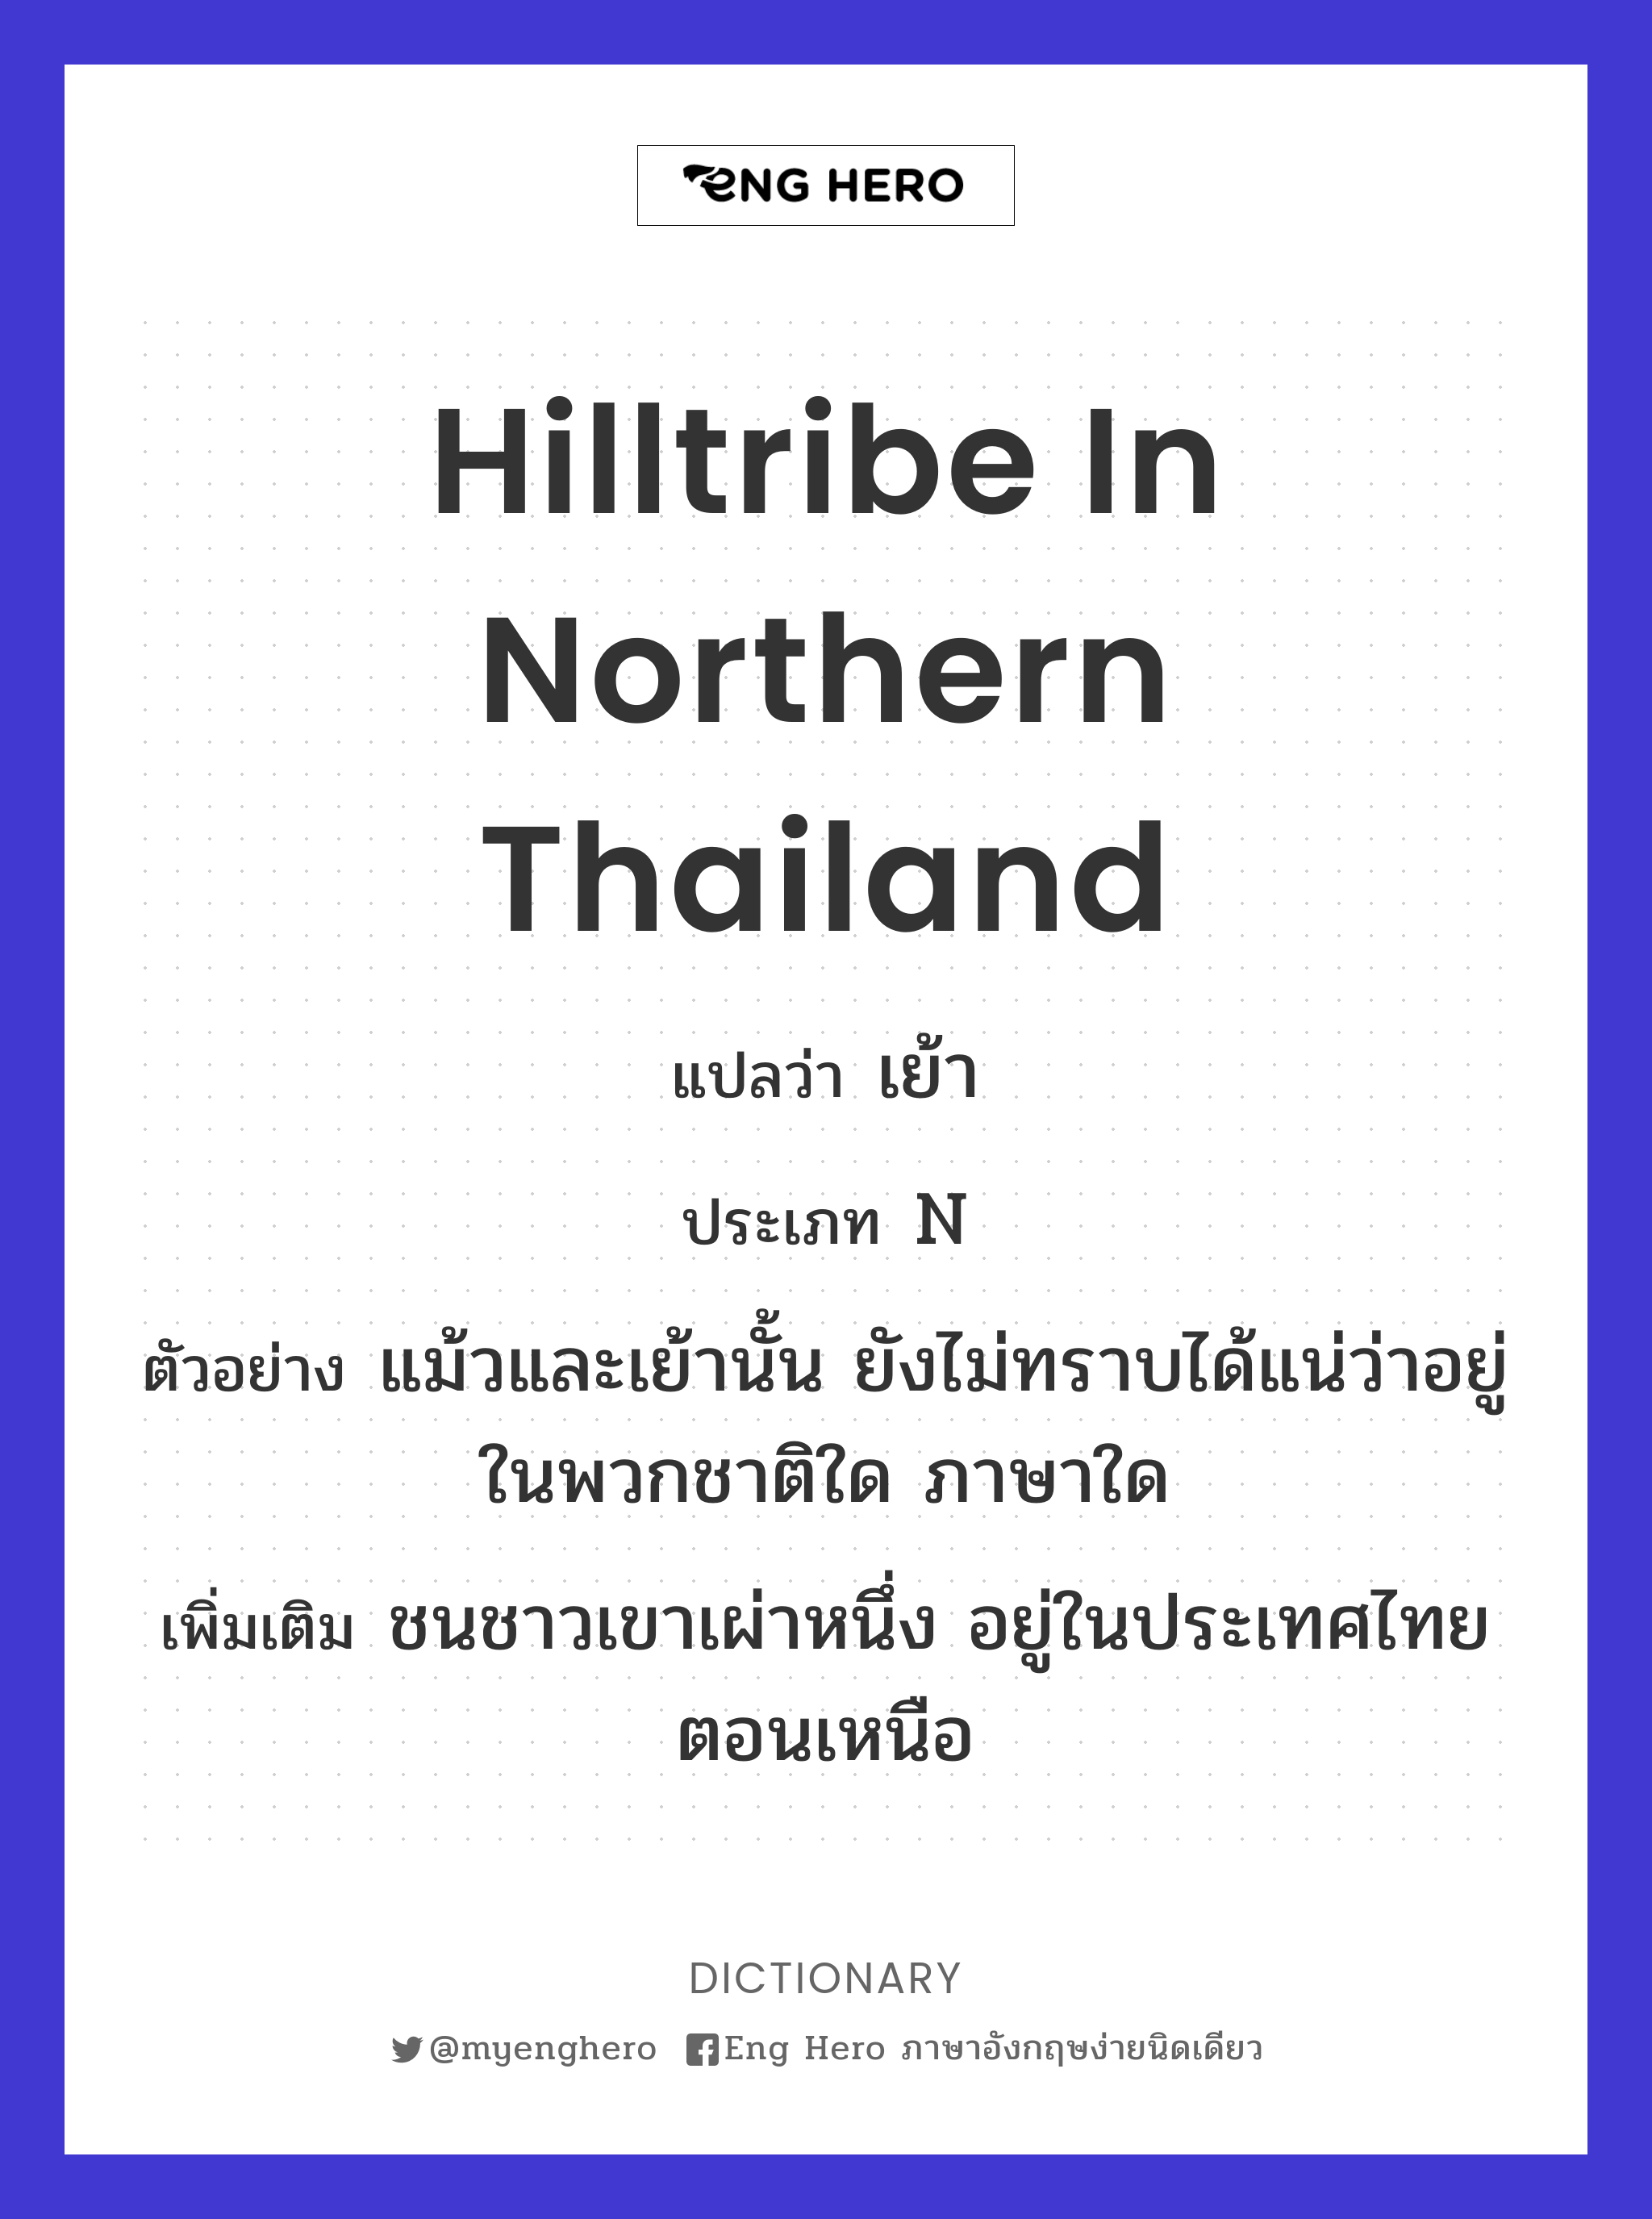 hilltribe in northern Thailand